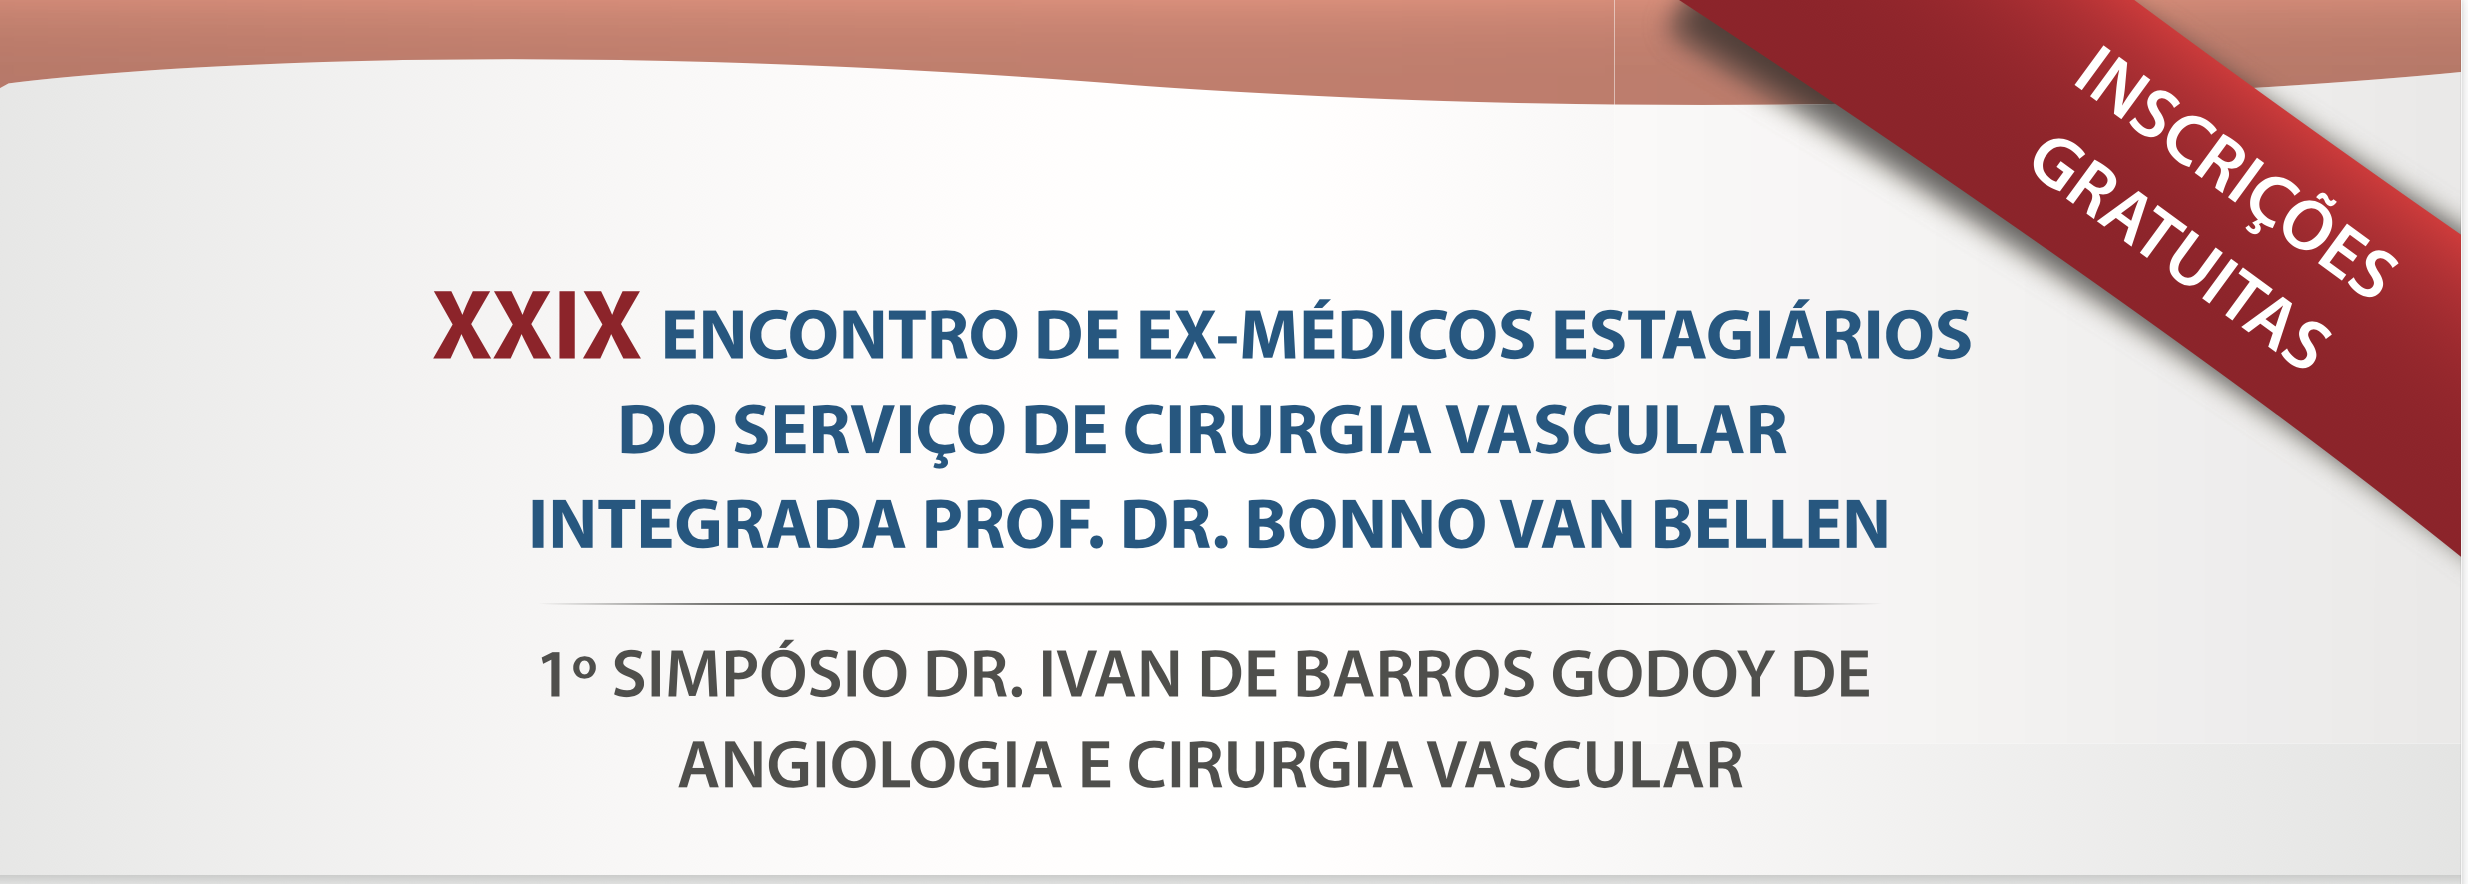 1° Simpósio Dr. Ivan de Barros Godoy de Angiologia e Cirurgia Vascular